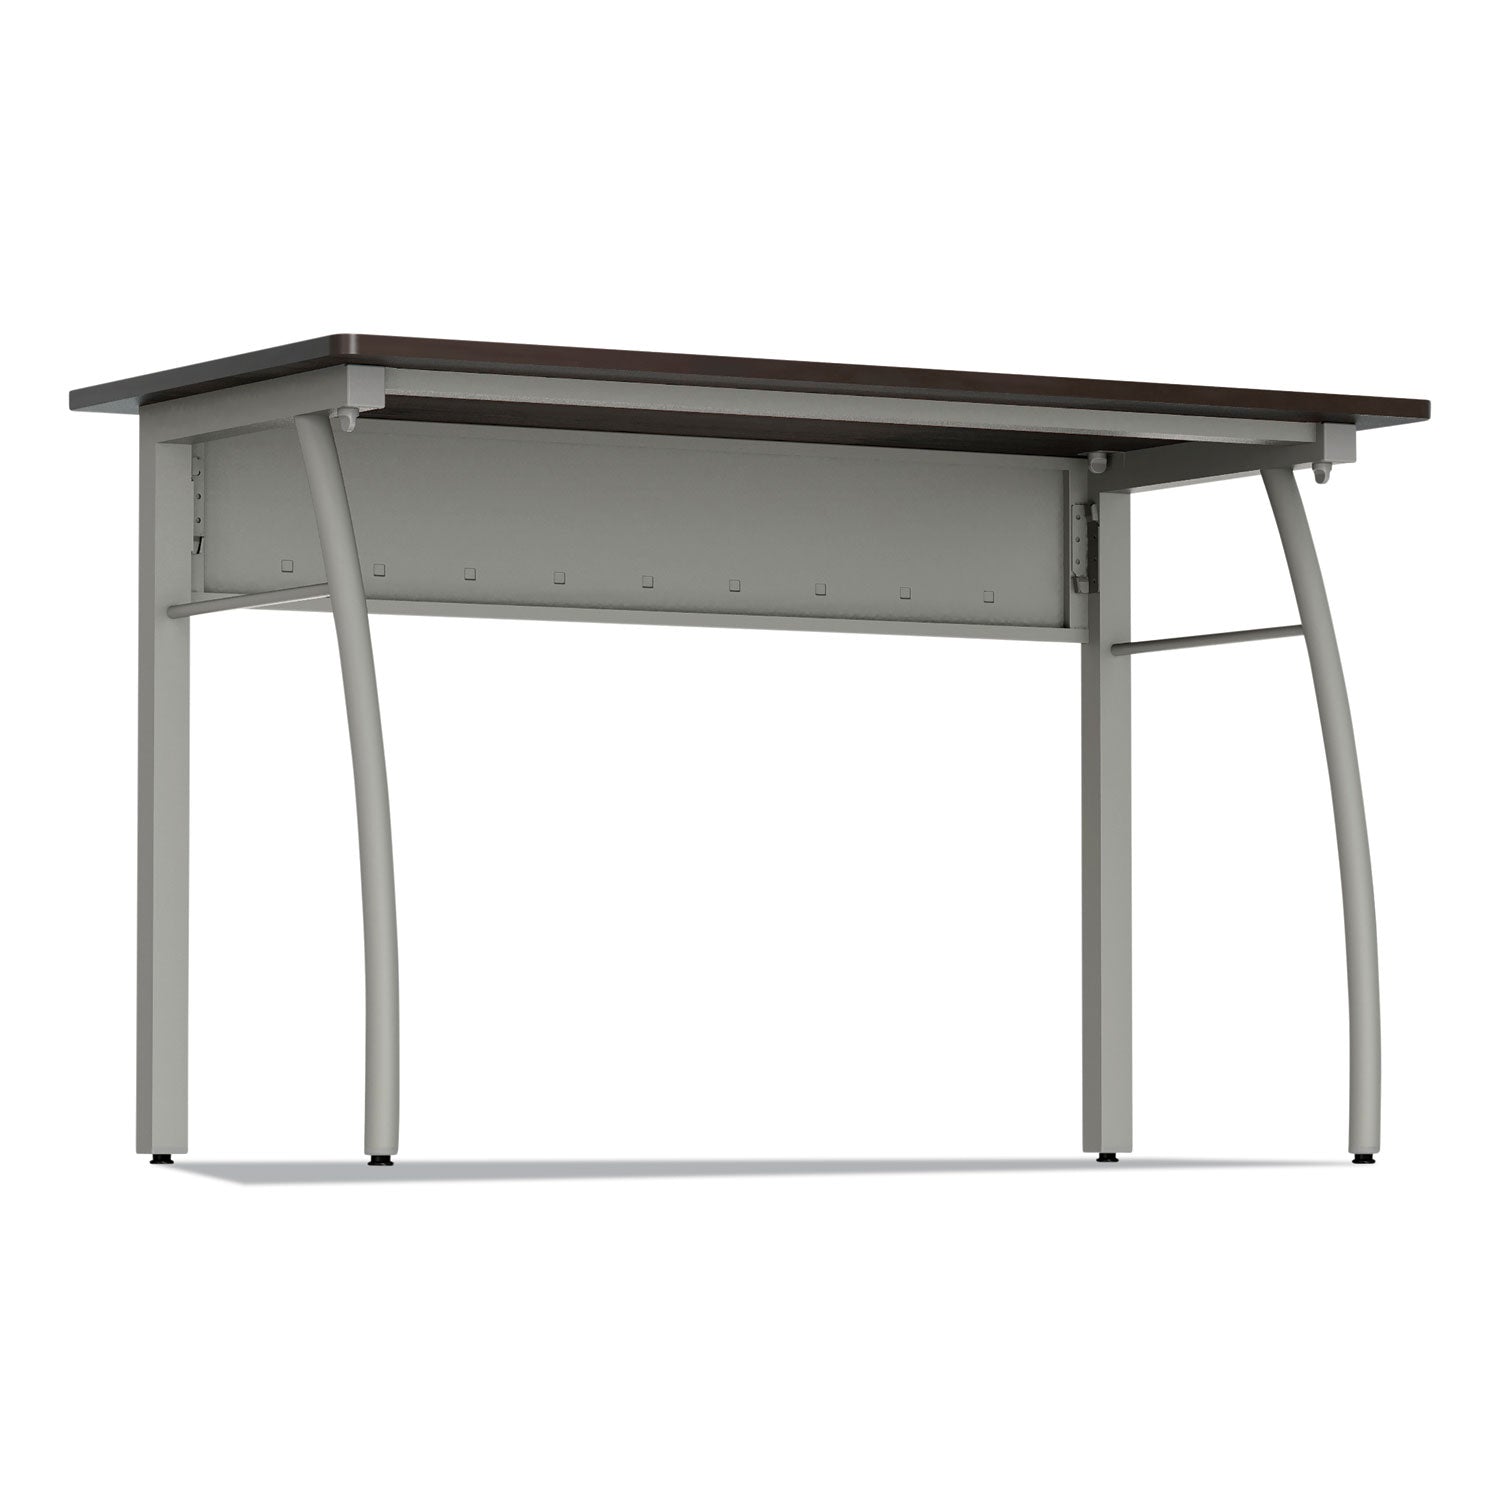 Trento Line Rectangular Desk, 47.25" x 23.63" x 29.5", Mocha/Gray - 